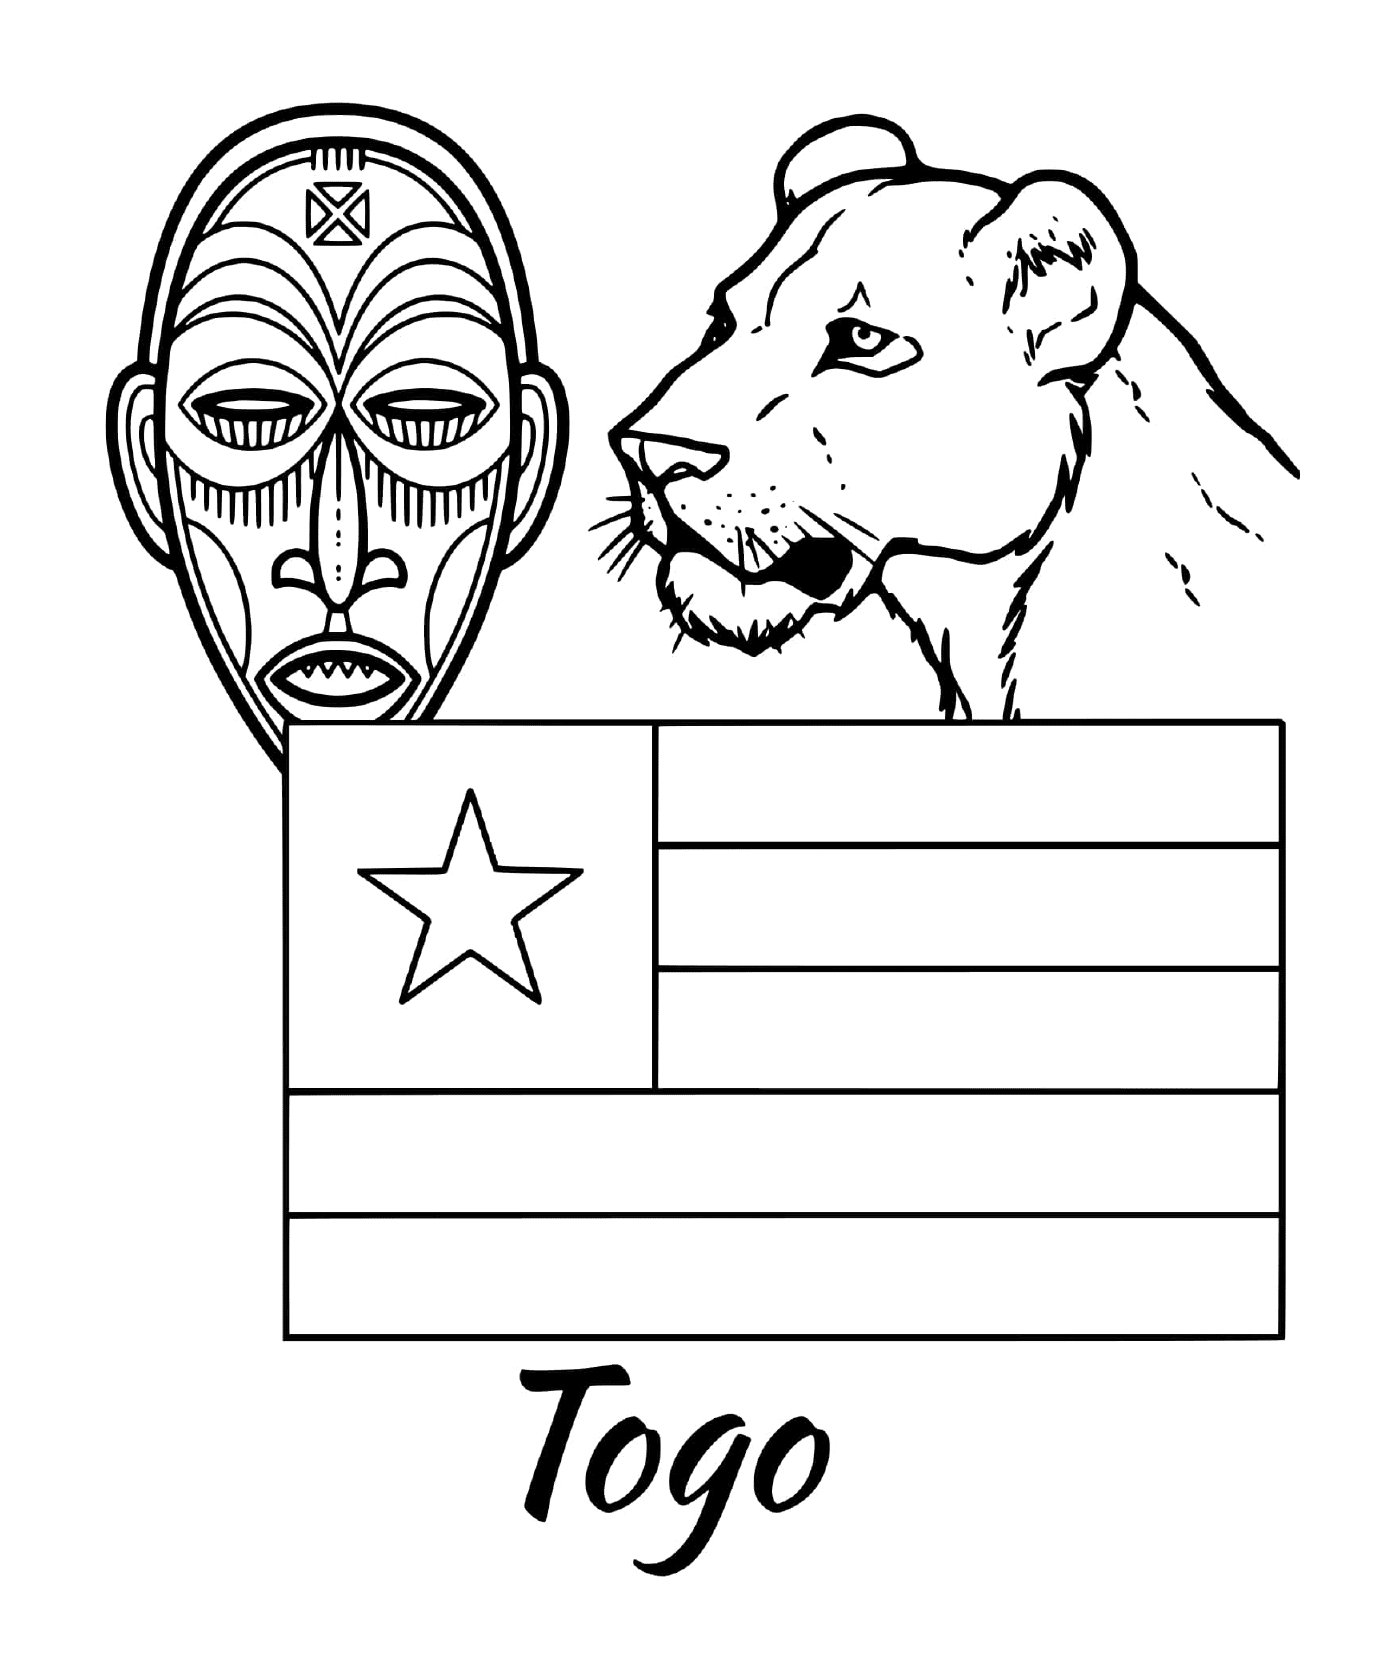  Togo flag with tribal mask 